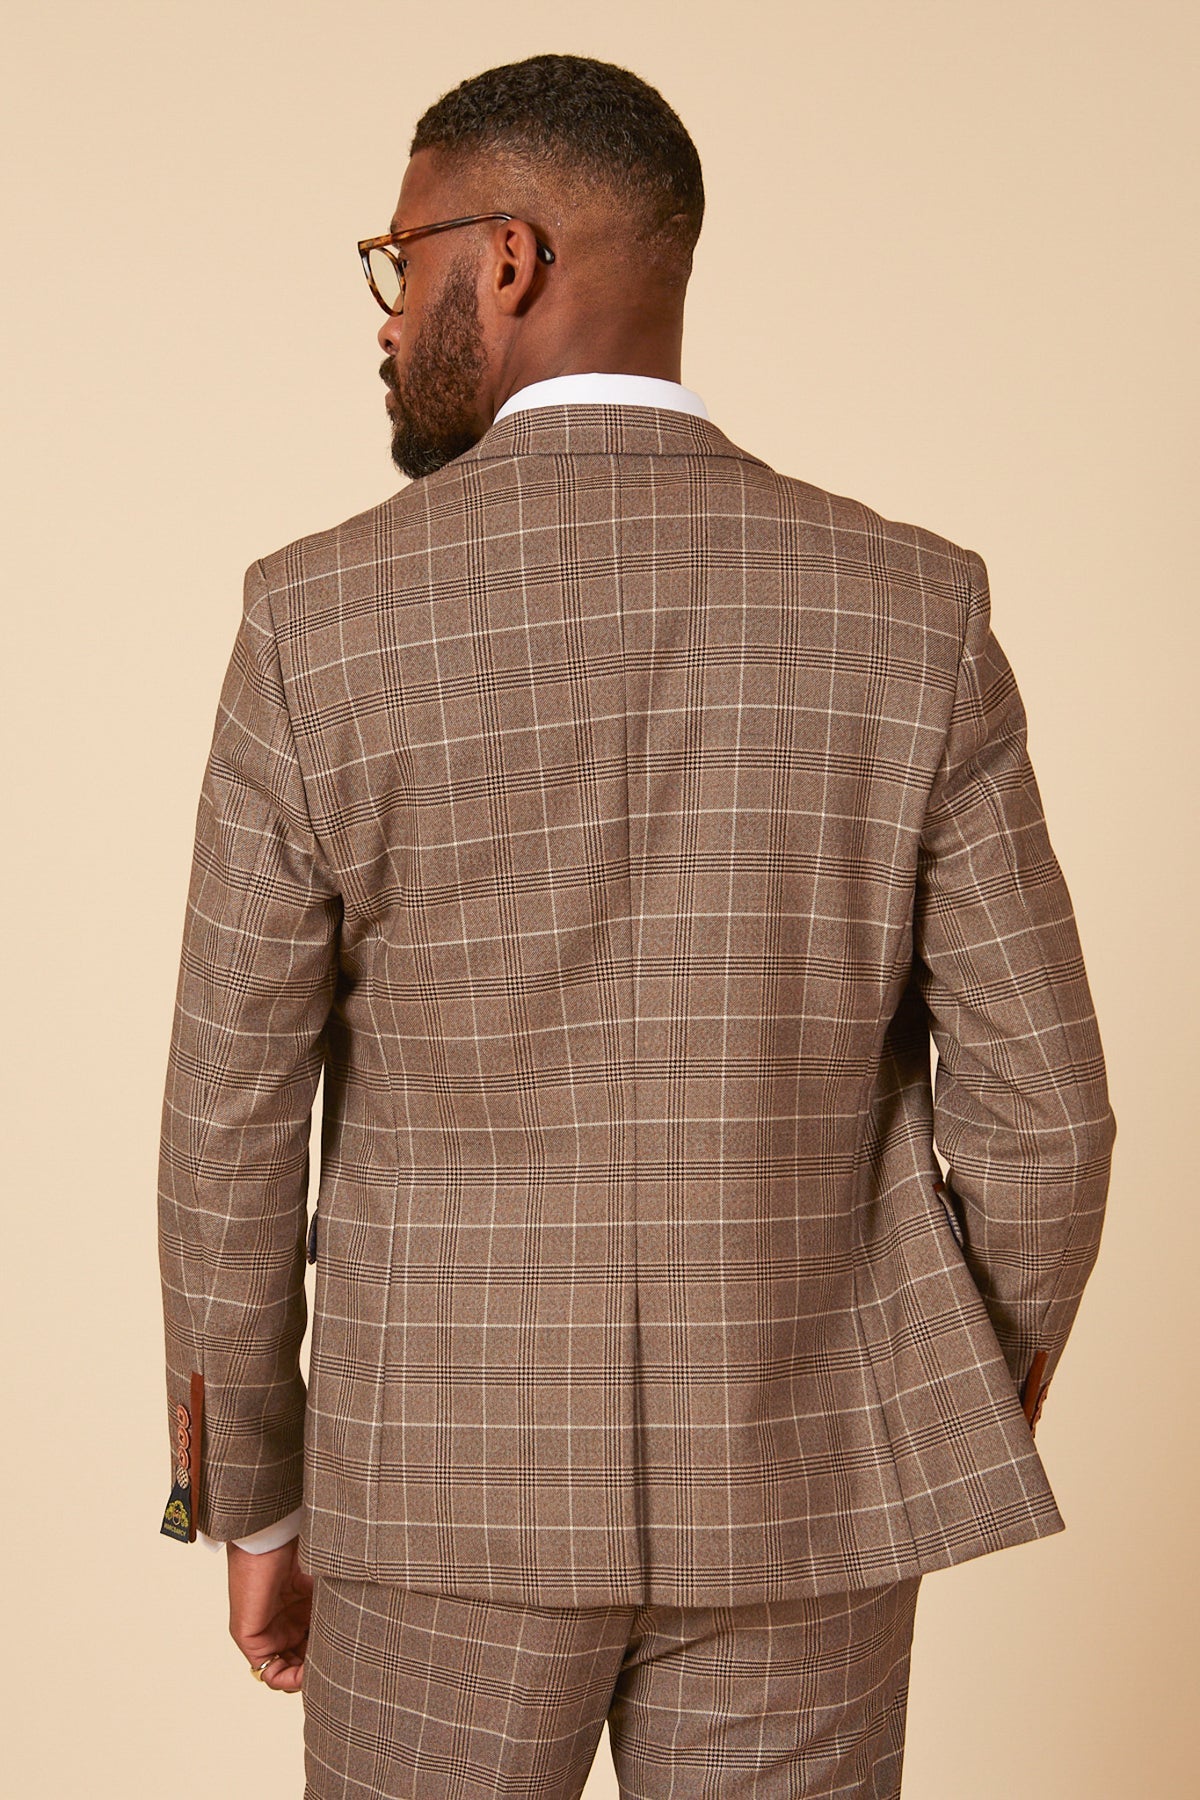 3-Piece Suit - Beige Men's Checkered Suit - Marc Darcy Ray Tan Suit